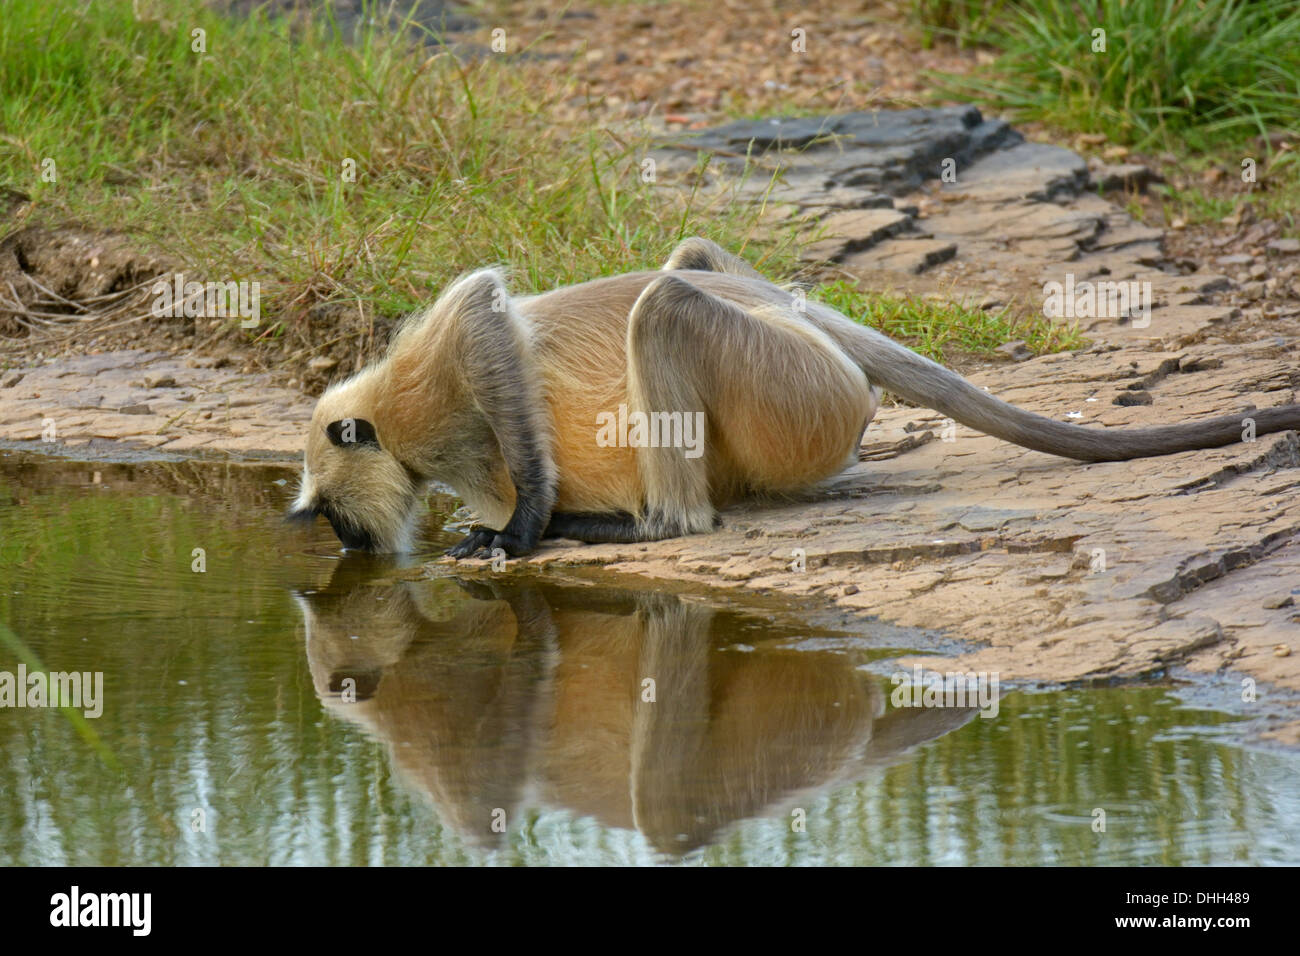 A Langur (Presbytis entellus) monkey drinking water in Ranthambhore tiger reserve Stock Photo